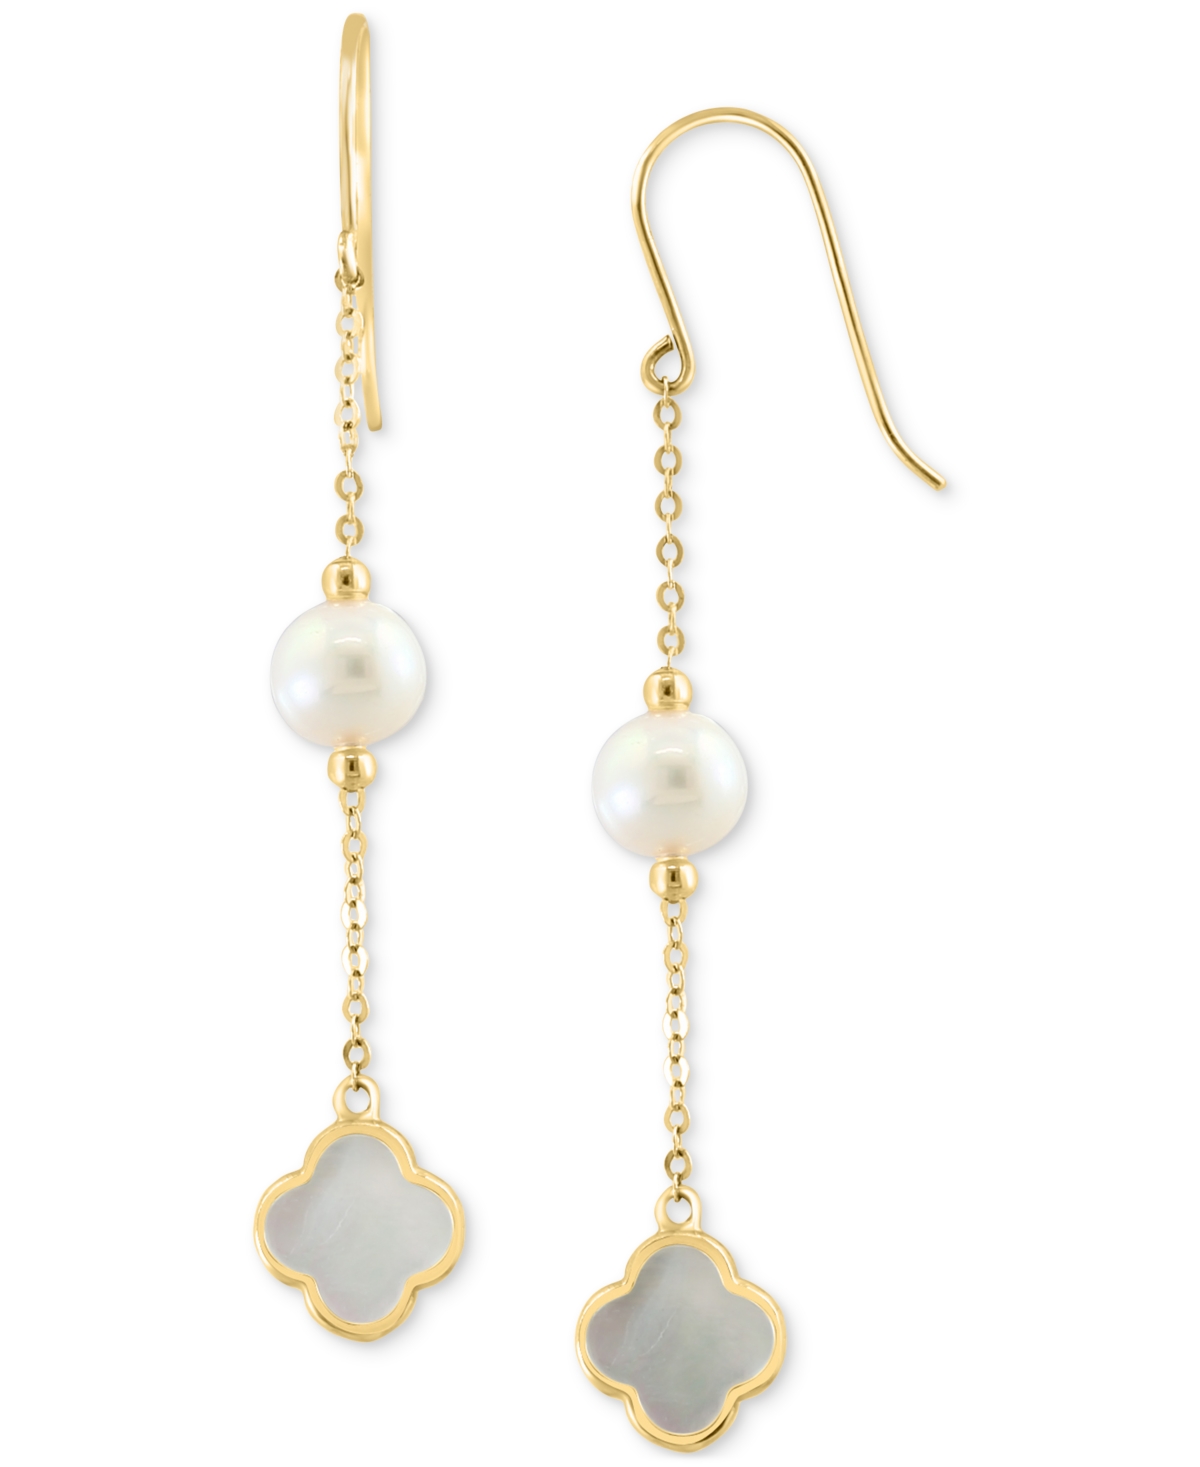 Effy Freshwater Pearl & Mother-of-Pearl Clover Linear Drop Earrings in 14k Gold - Yellow Gol